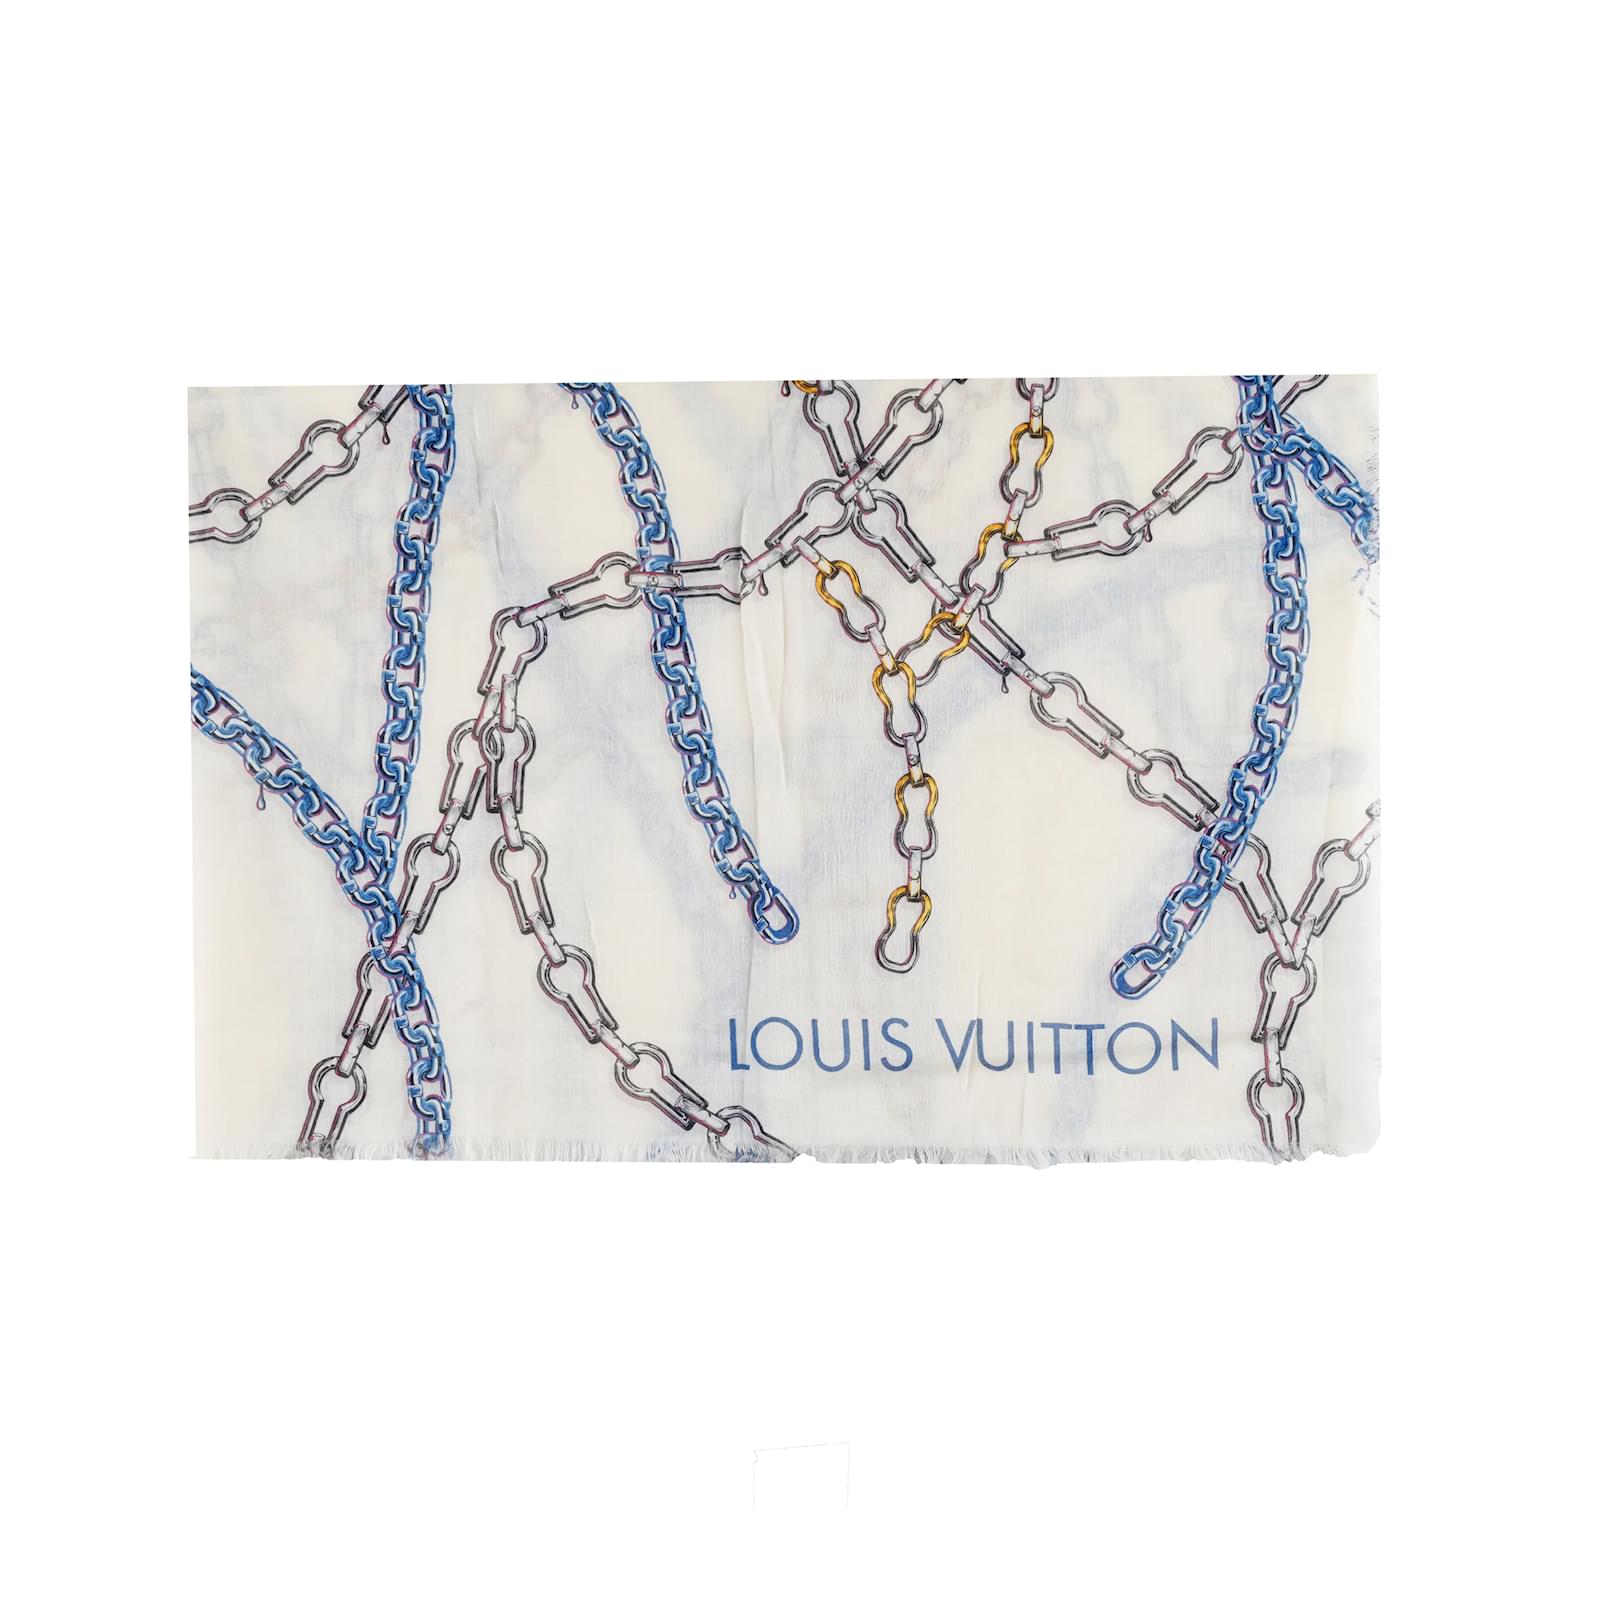 Silk Scarves Louis Vuitton Louis Vuitton Blue and White Alma Print Scarf